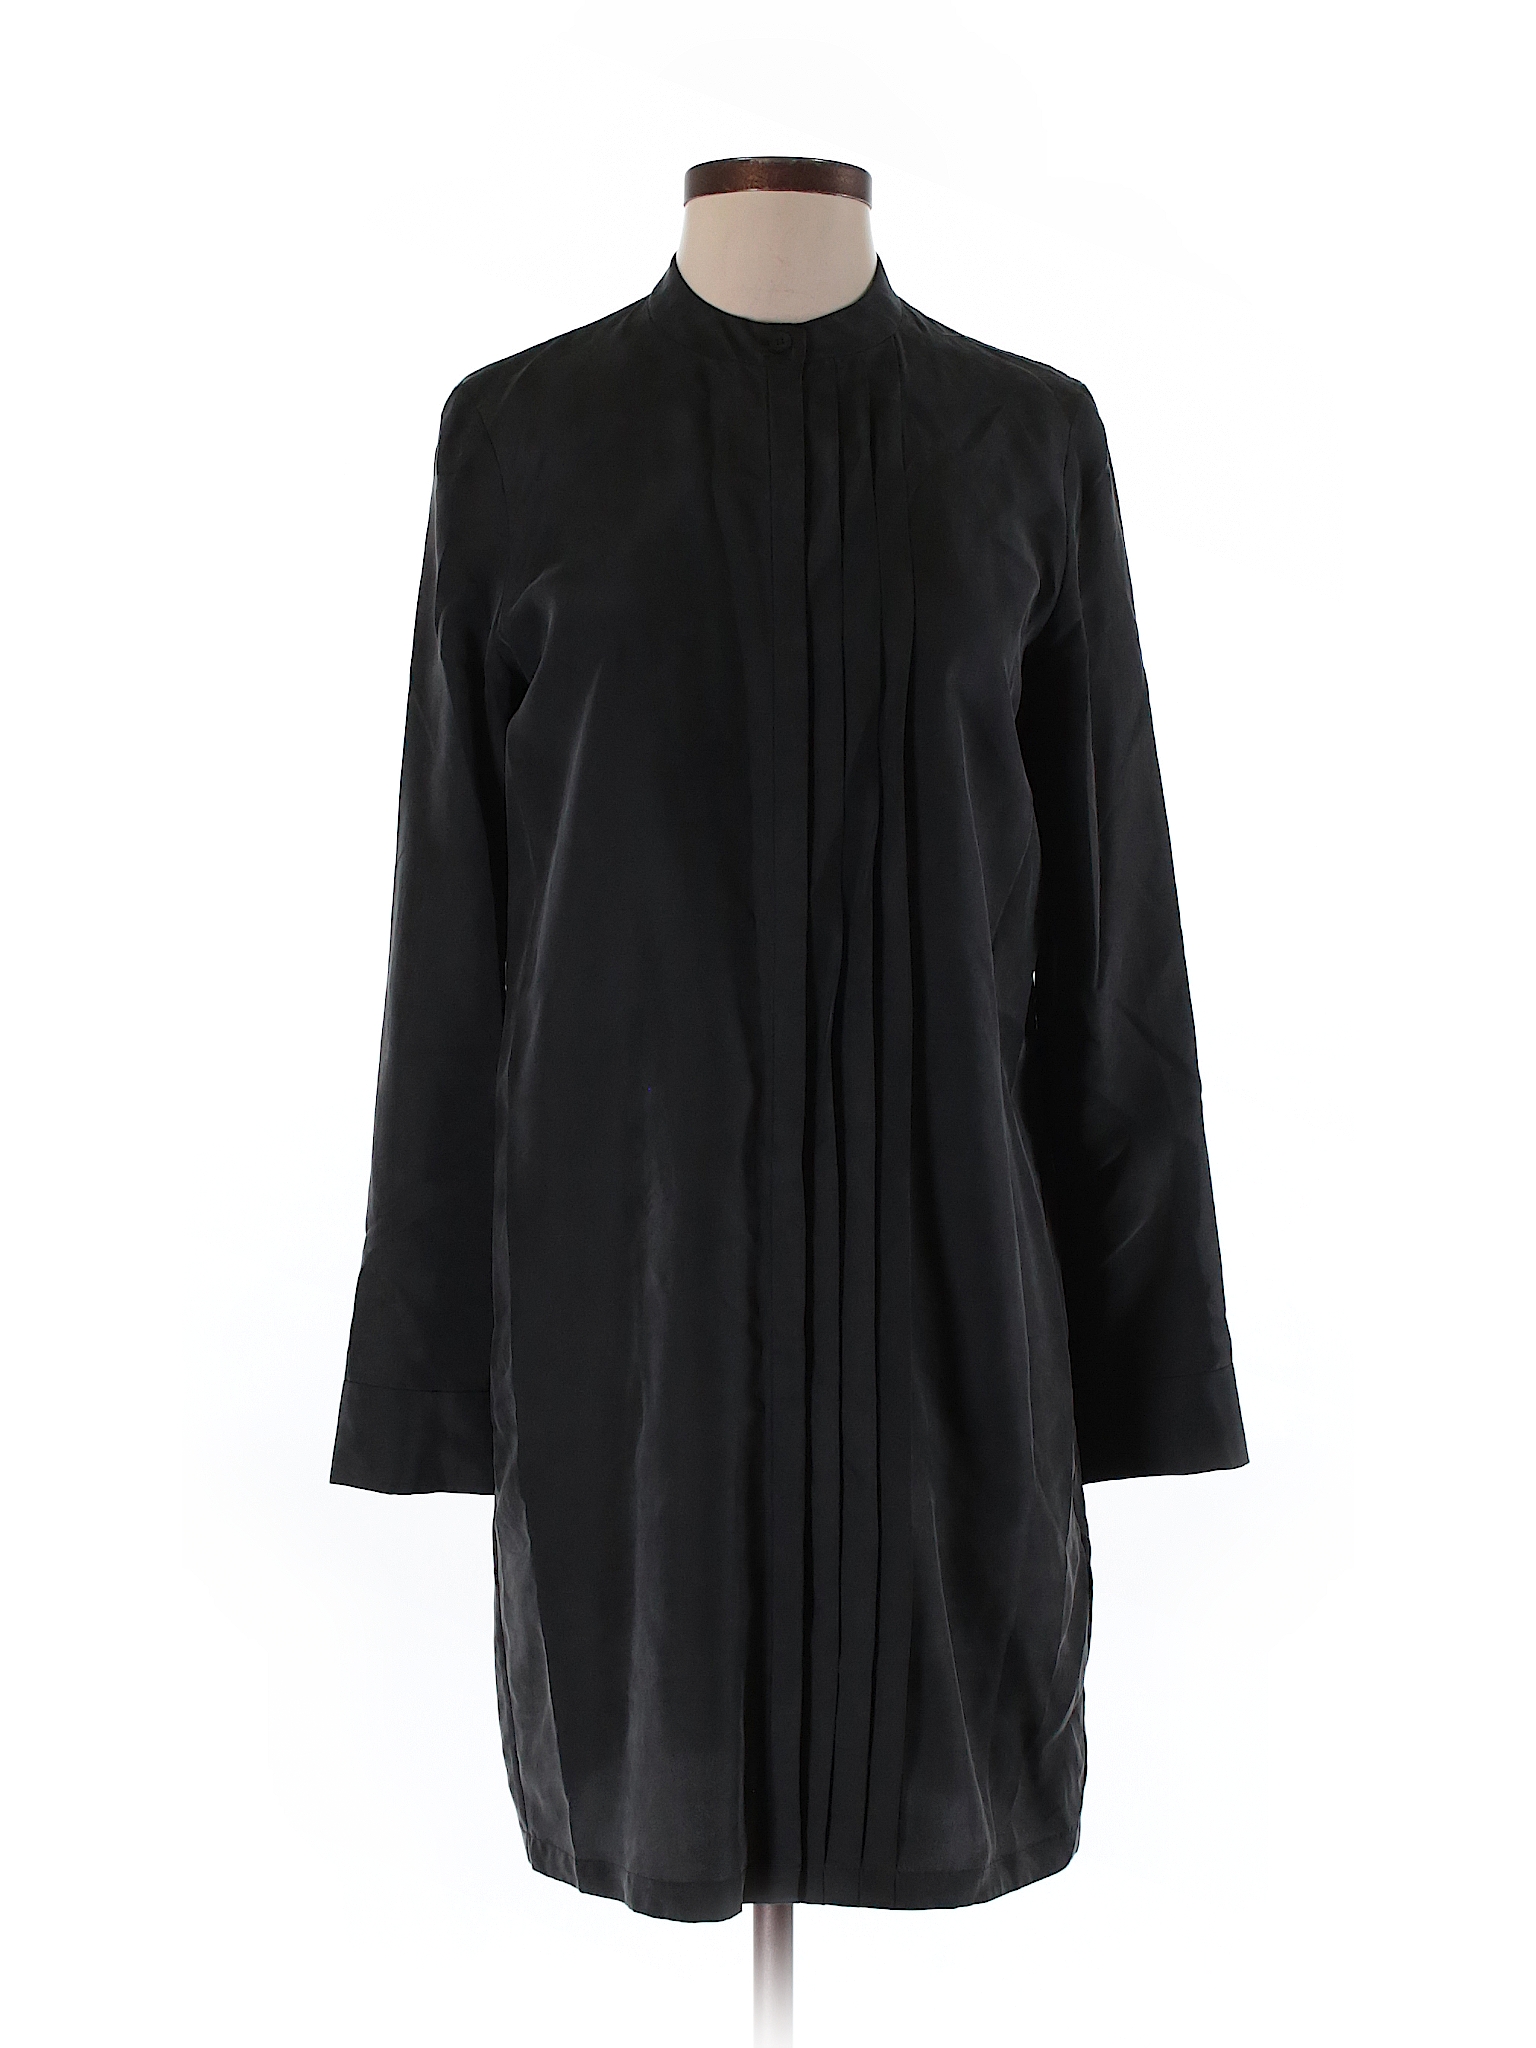 Kate Spade New York 100% Silk Solid Gray Silk Dress Size XS - 95% off ...